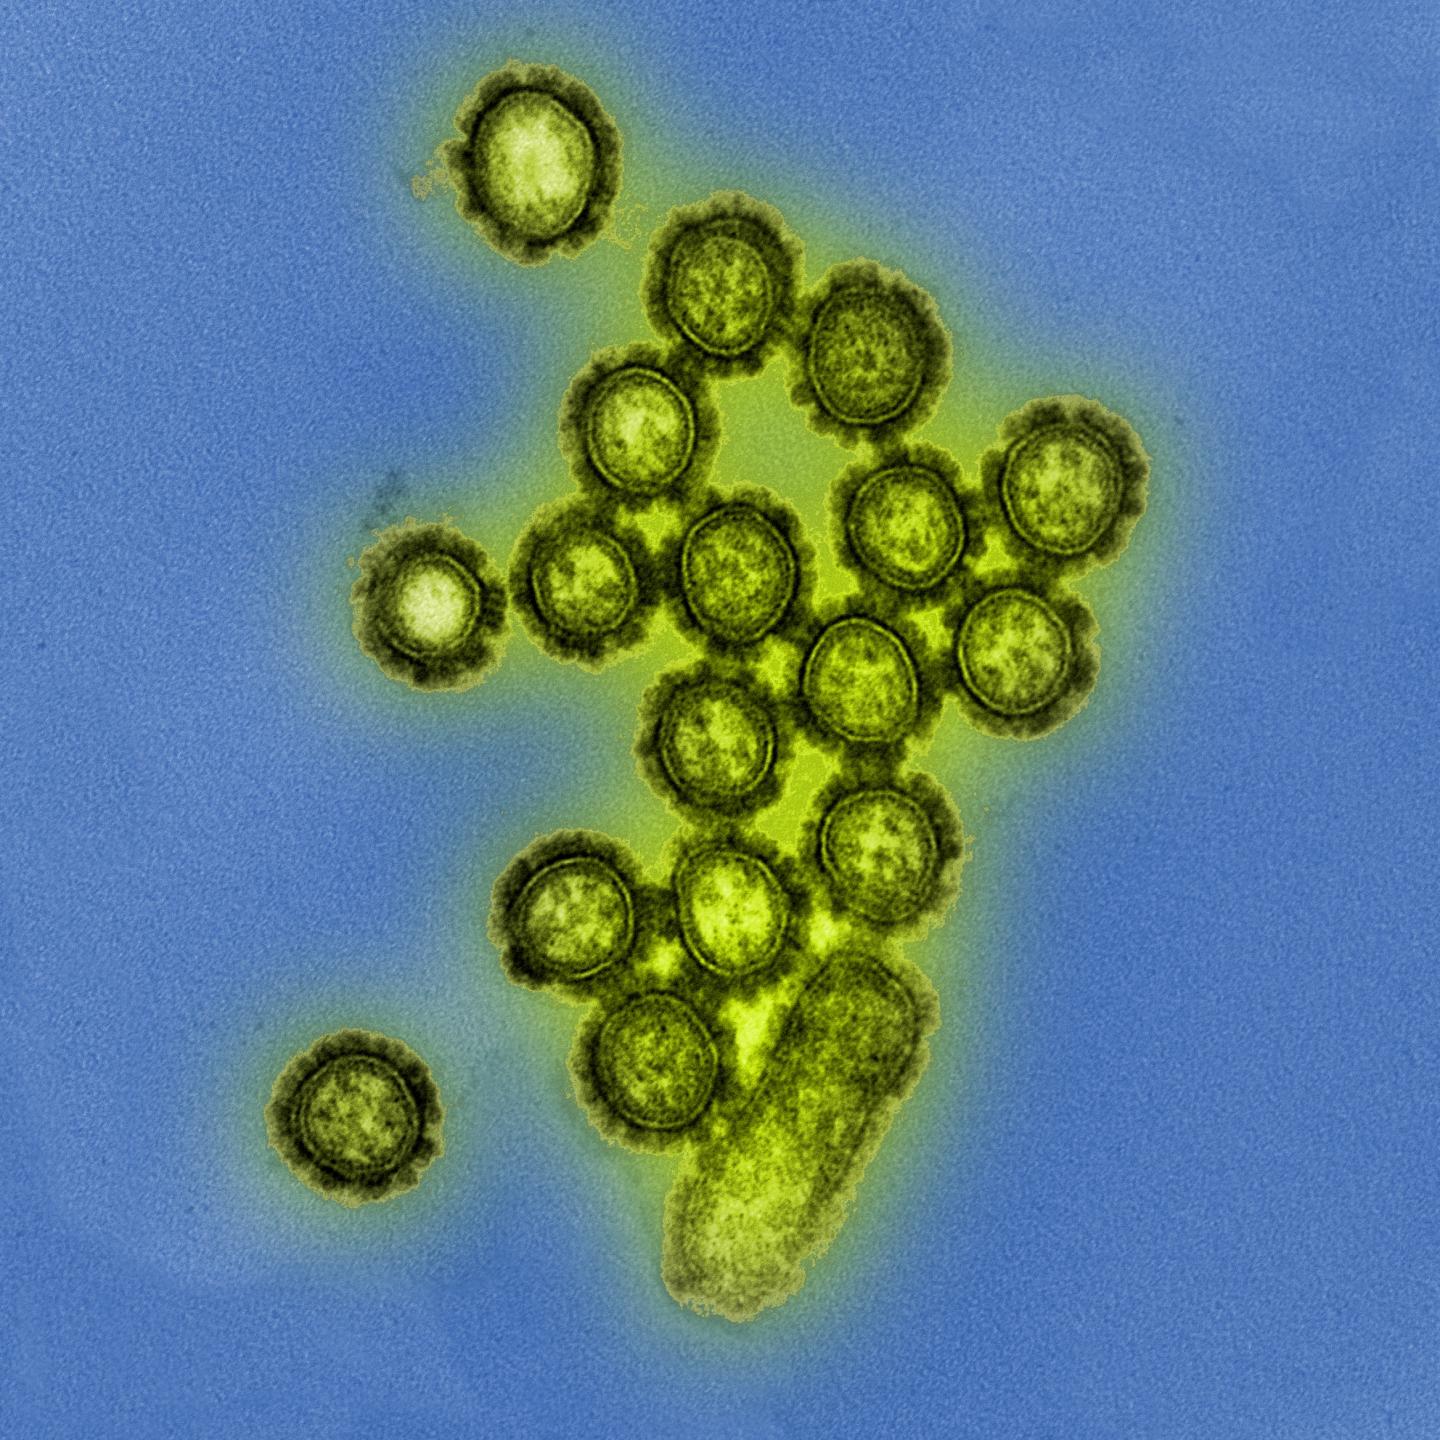 H1N1 Influenza Virus Particles